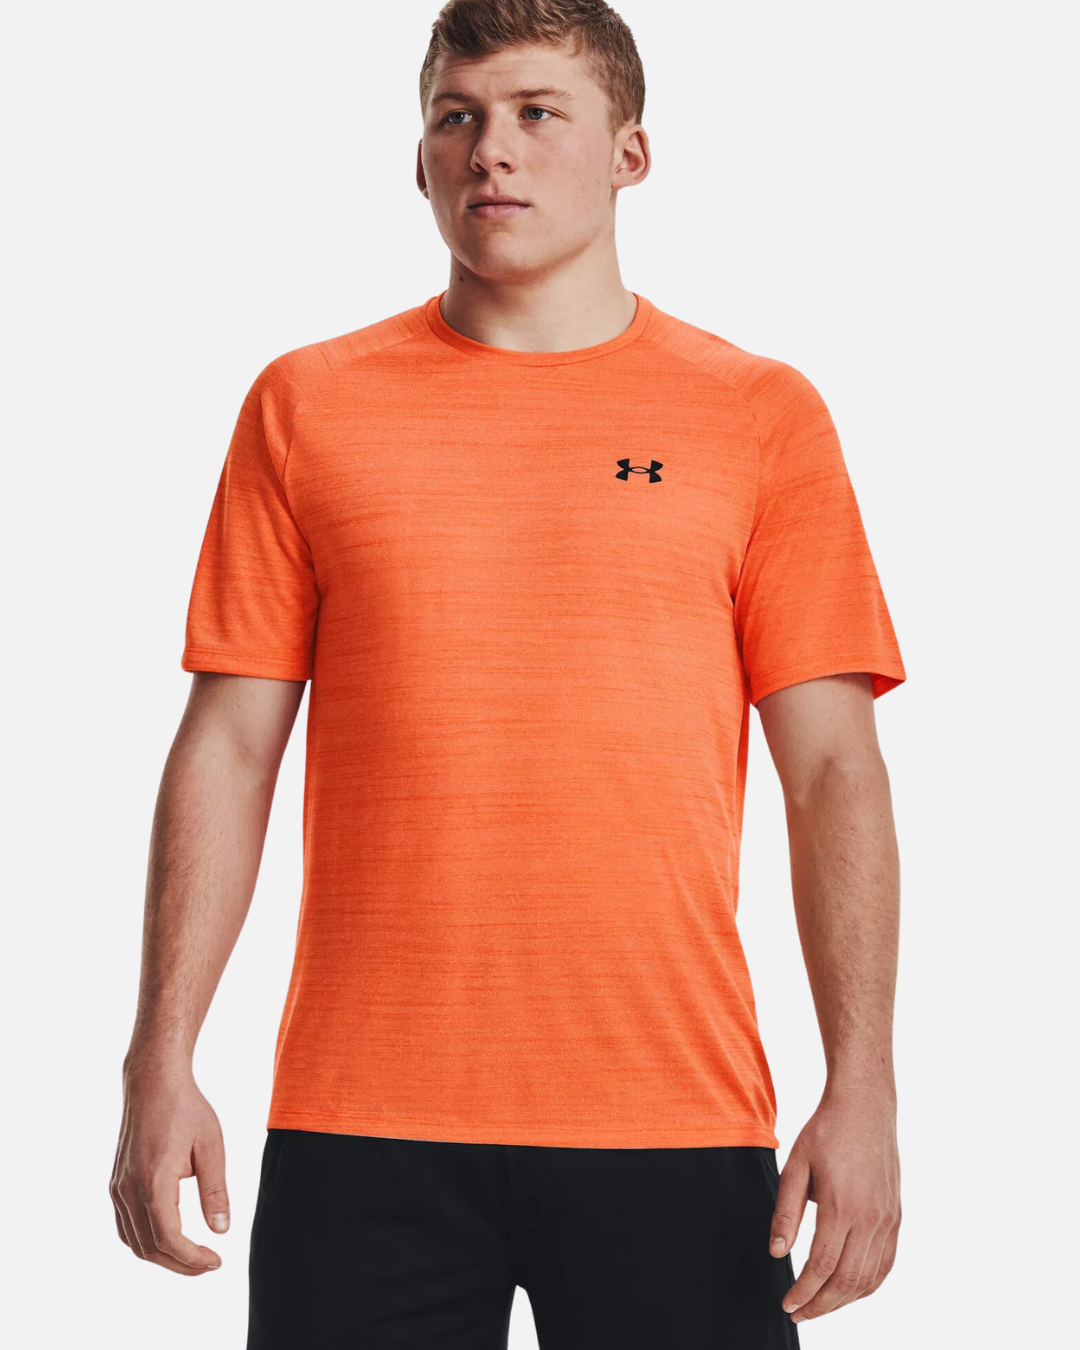 Under Armor Tiger Tech 2.0 T-shirt - Orange